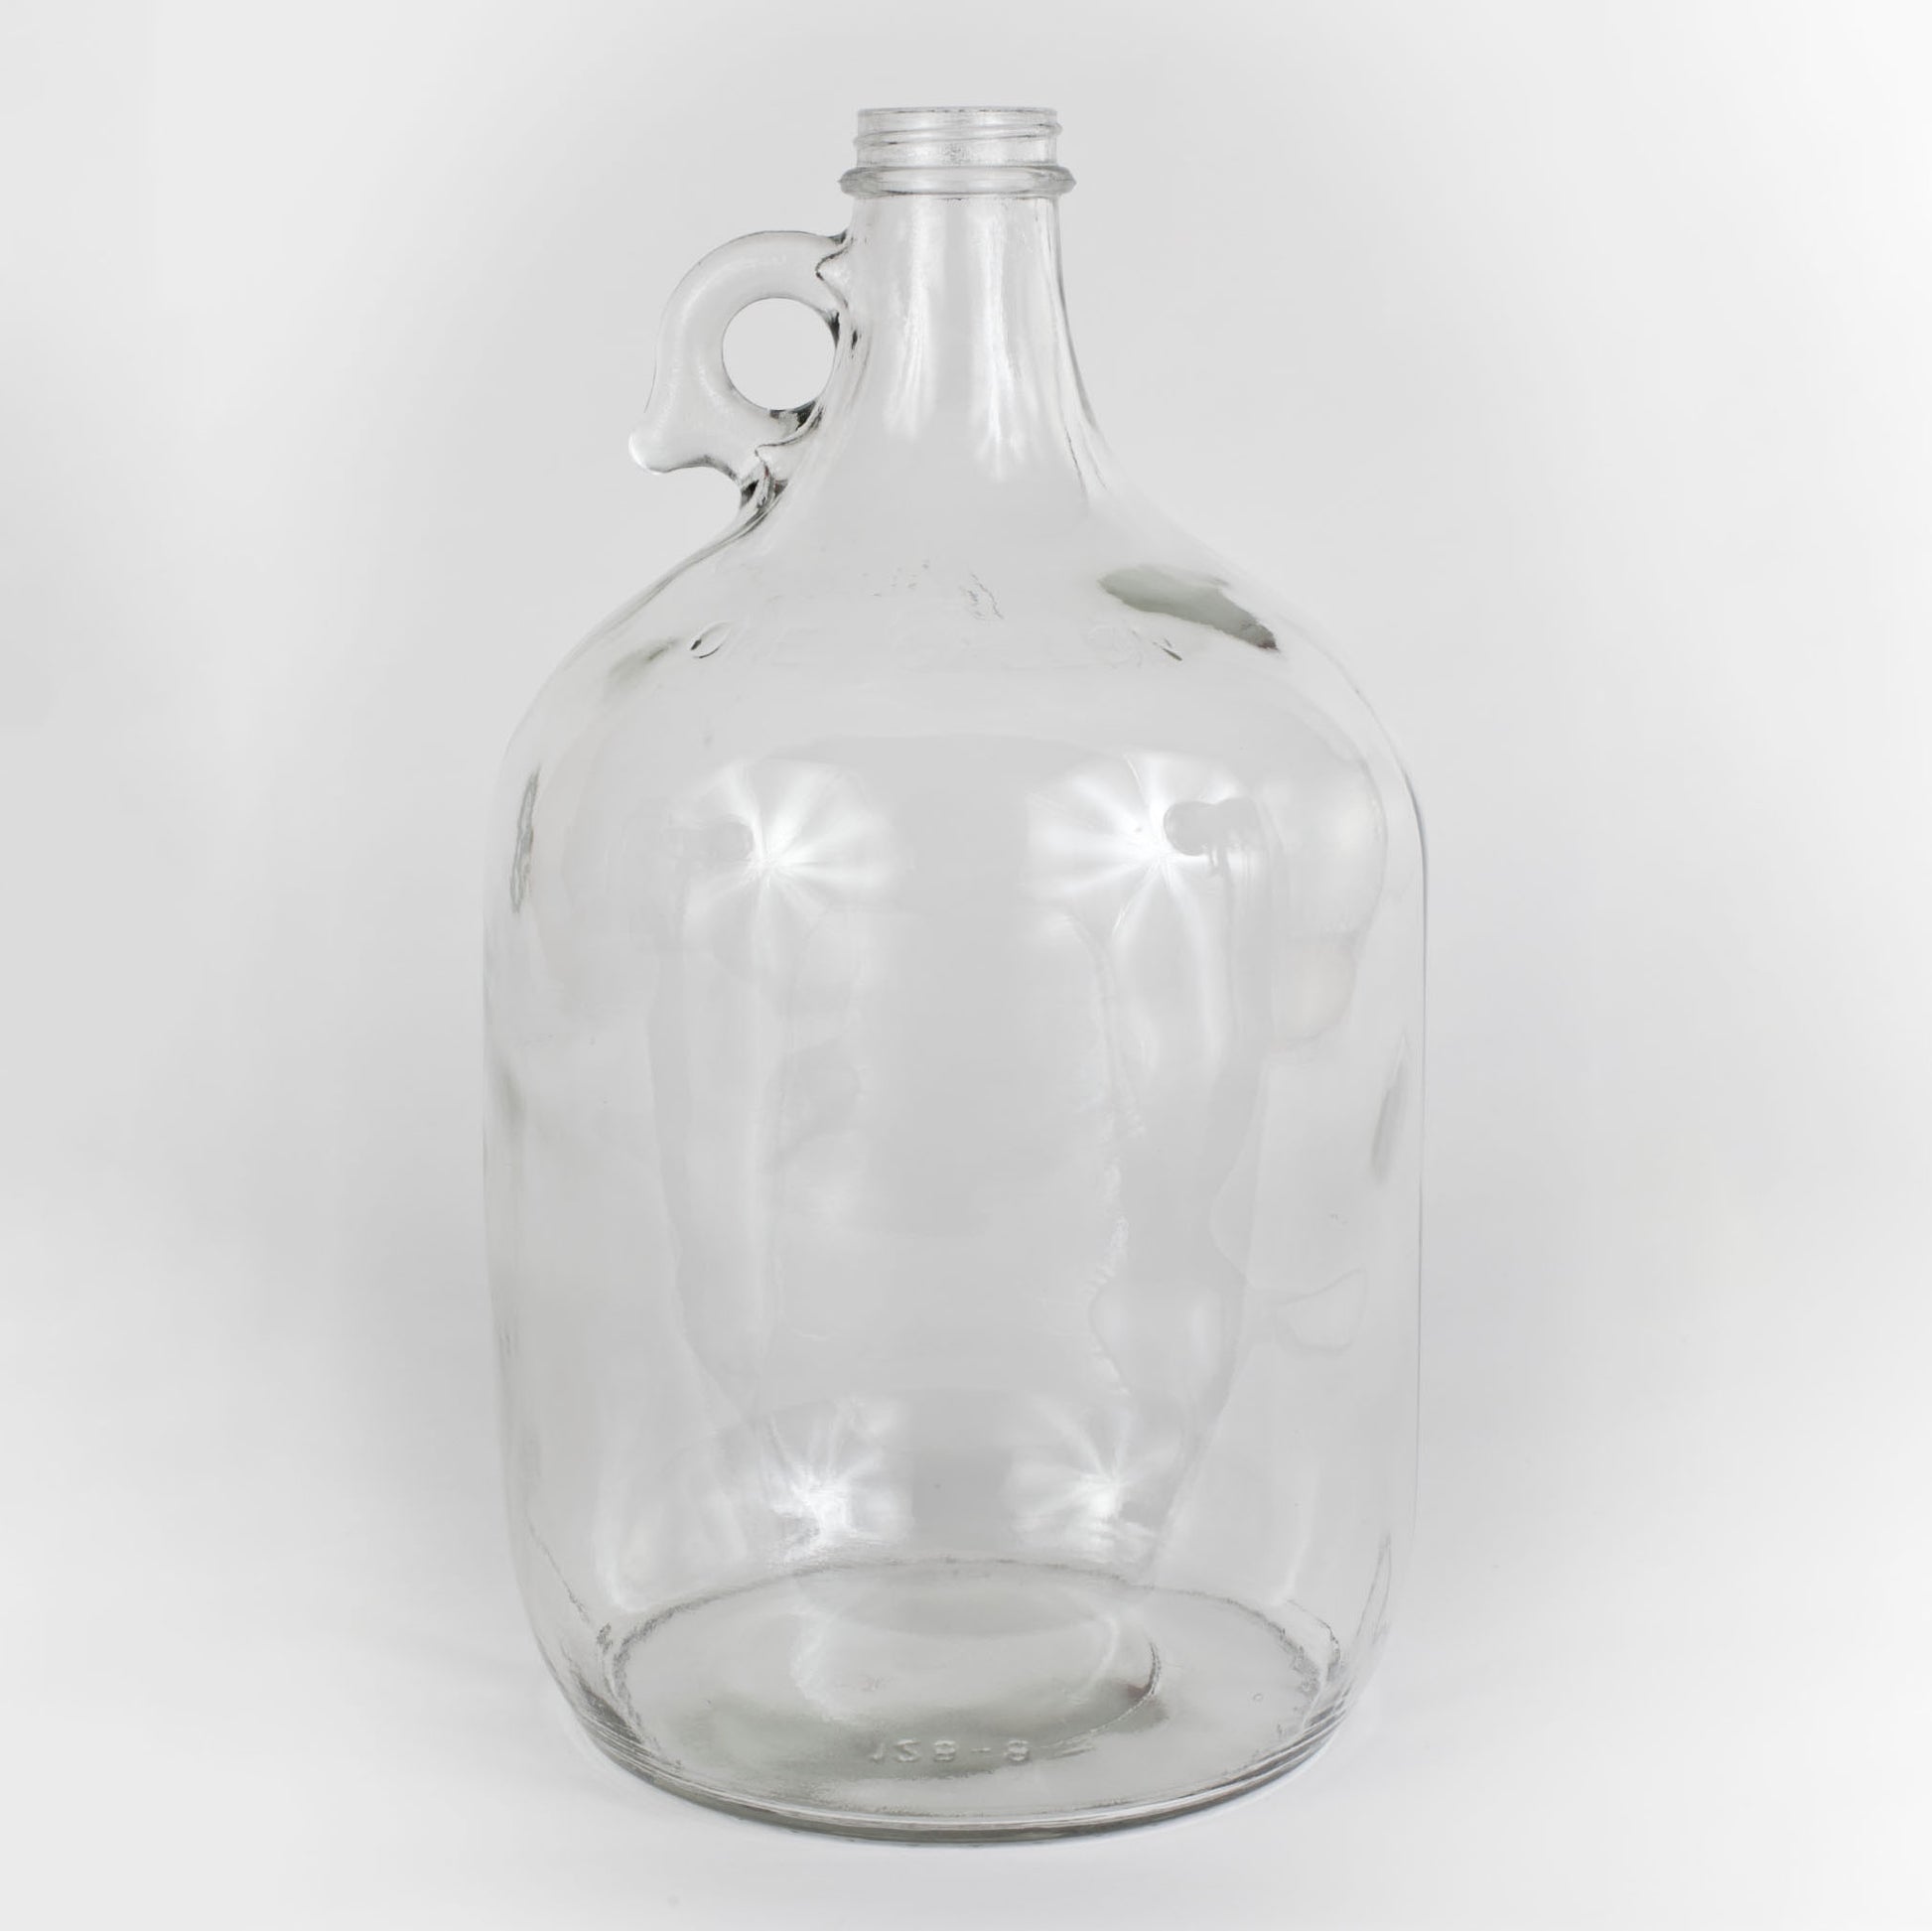 Clear one gallon glass jug